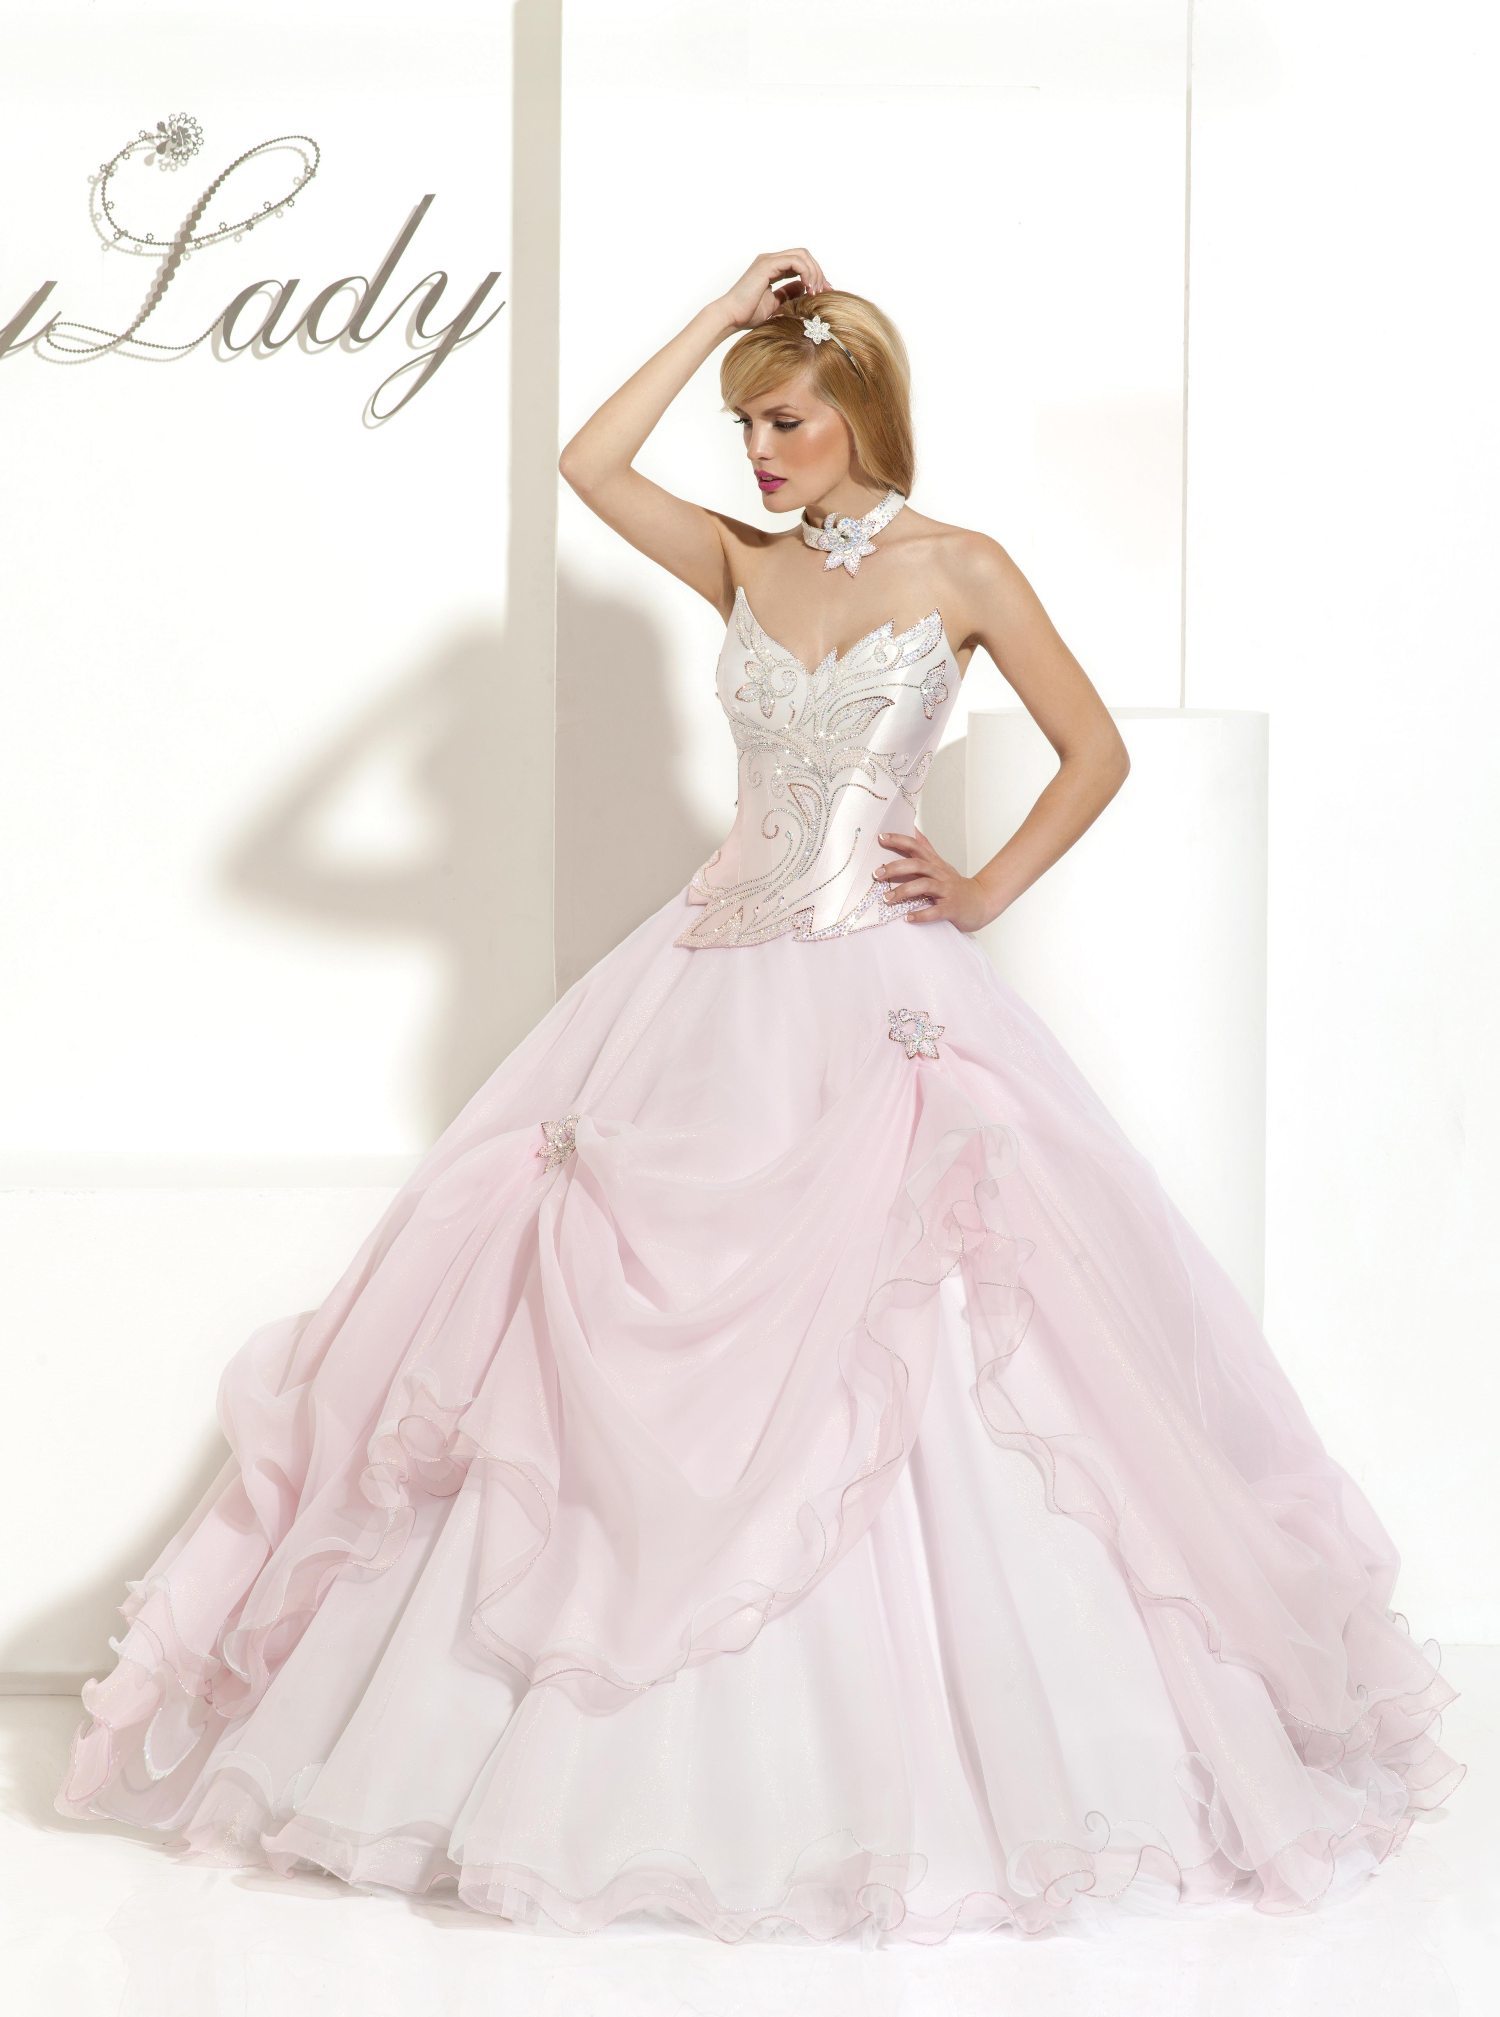 Wedding Dress - Lady Valeria - Lady Valeria Skirt - Lady Valeria Necklace | MyLady Bridal Gown